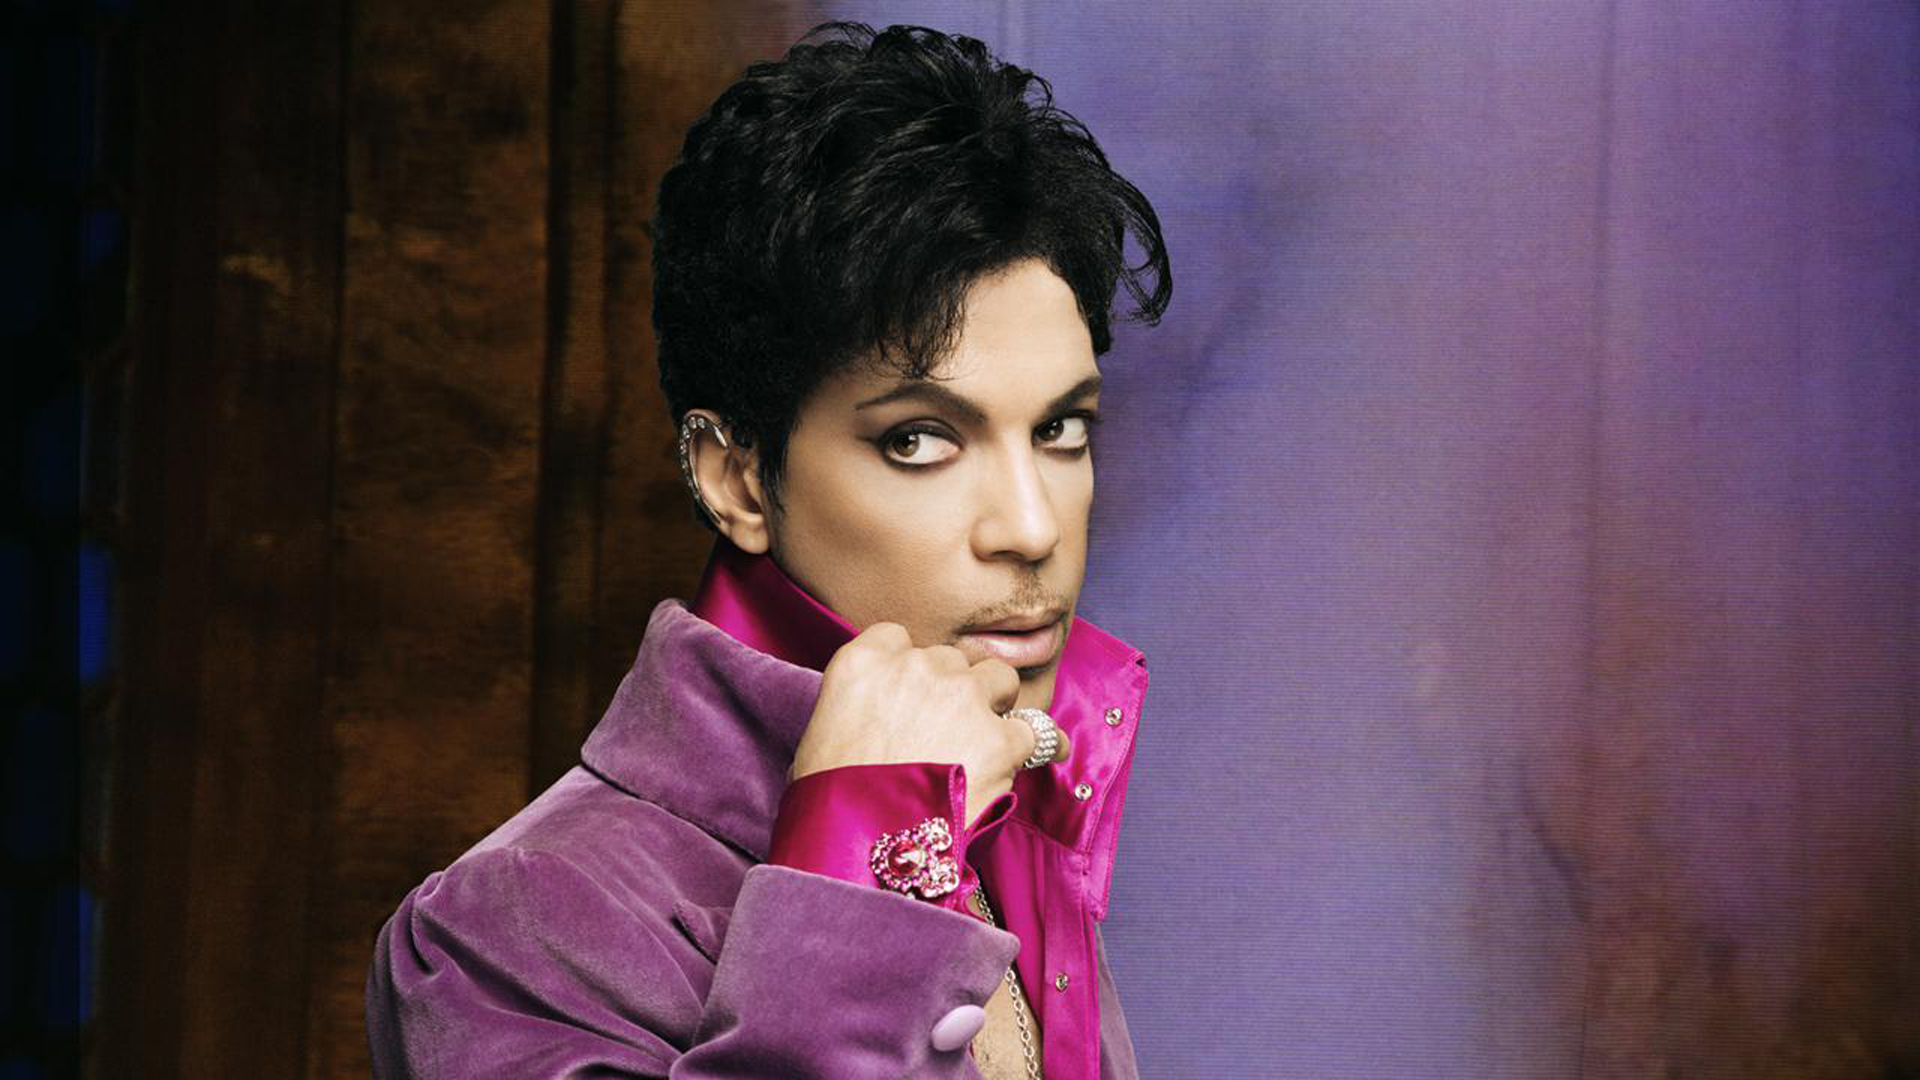 prince wallpaper hd,purple,black hair,magenta,photography,portrait